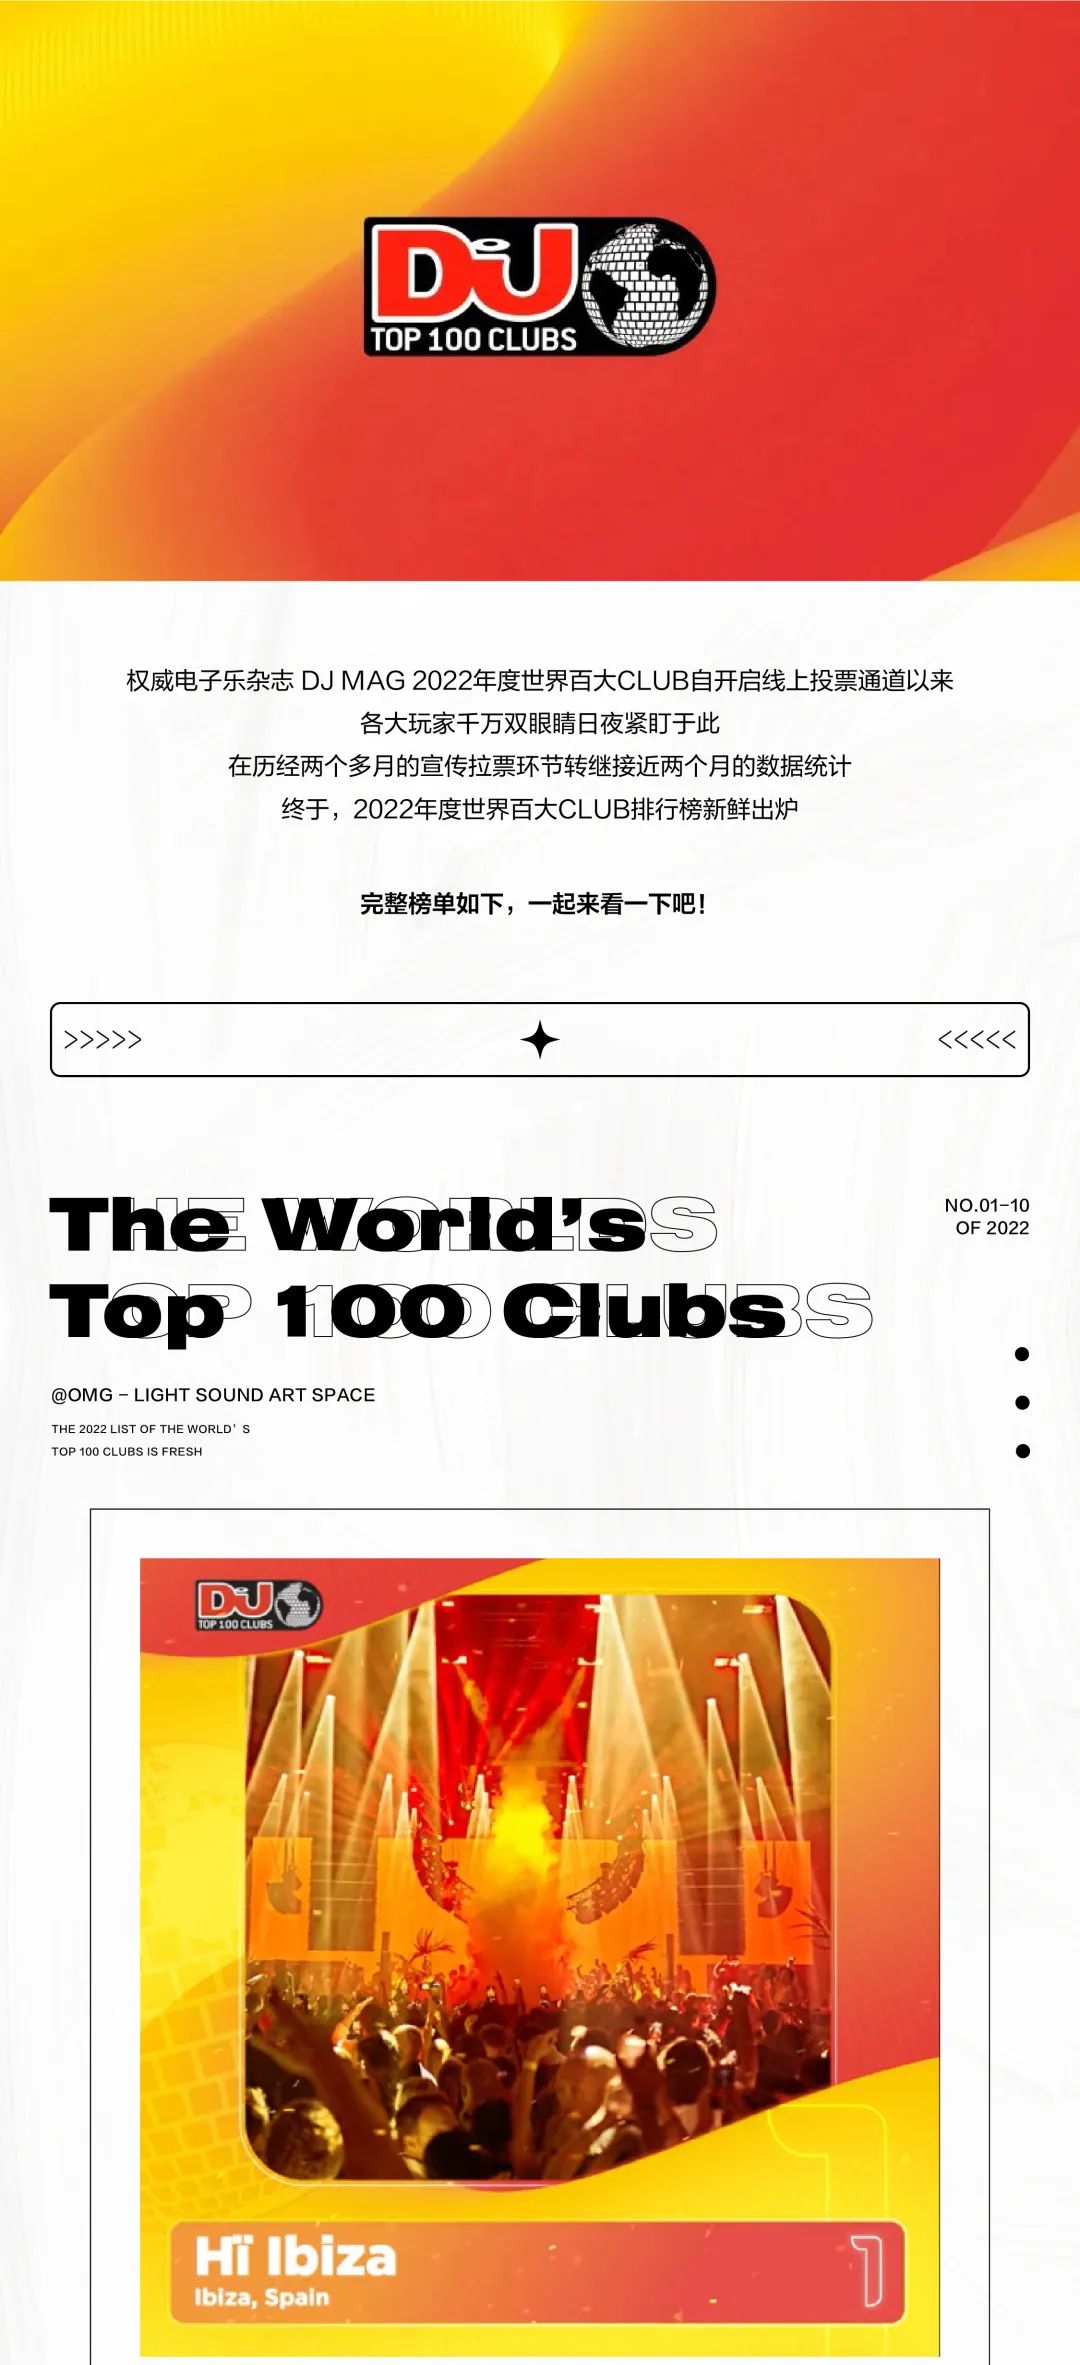 2022 DJ MAG TOP 100 Clubs揭晓，看完你最想去哪家打卡？-张家港OMG酒吧/OMG光音艺术空间